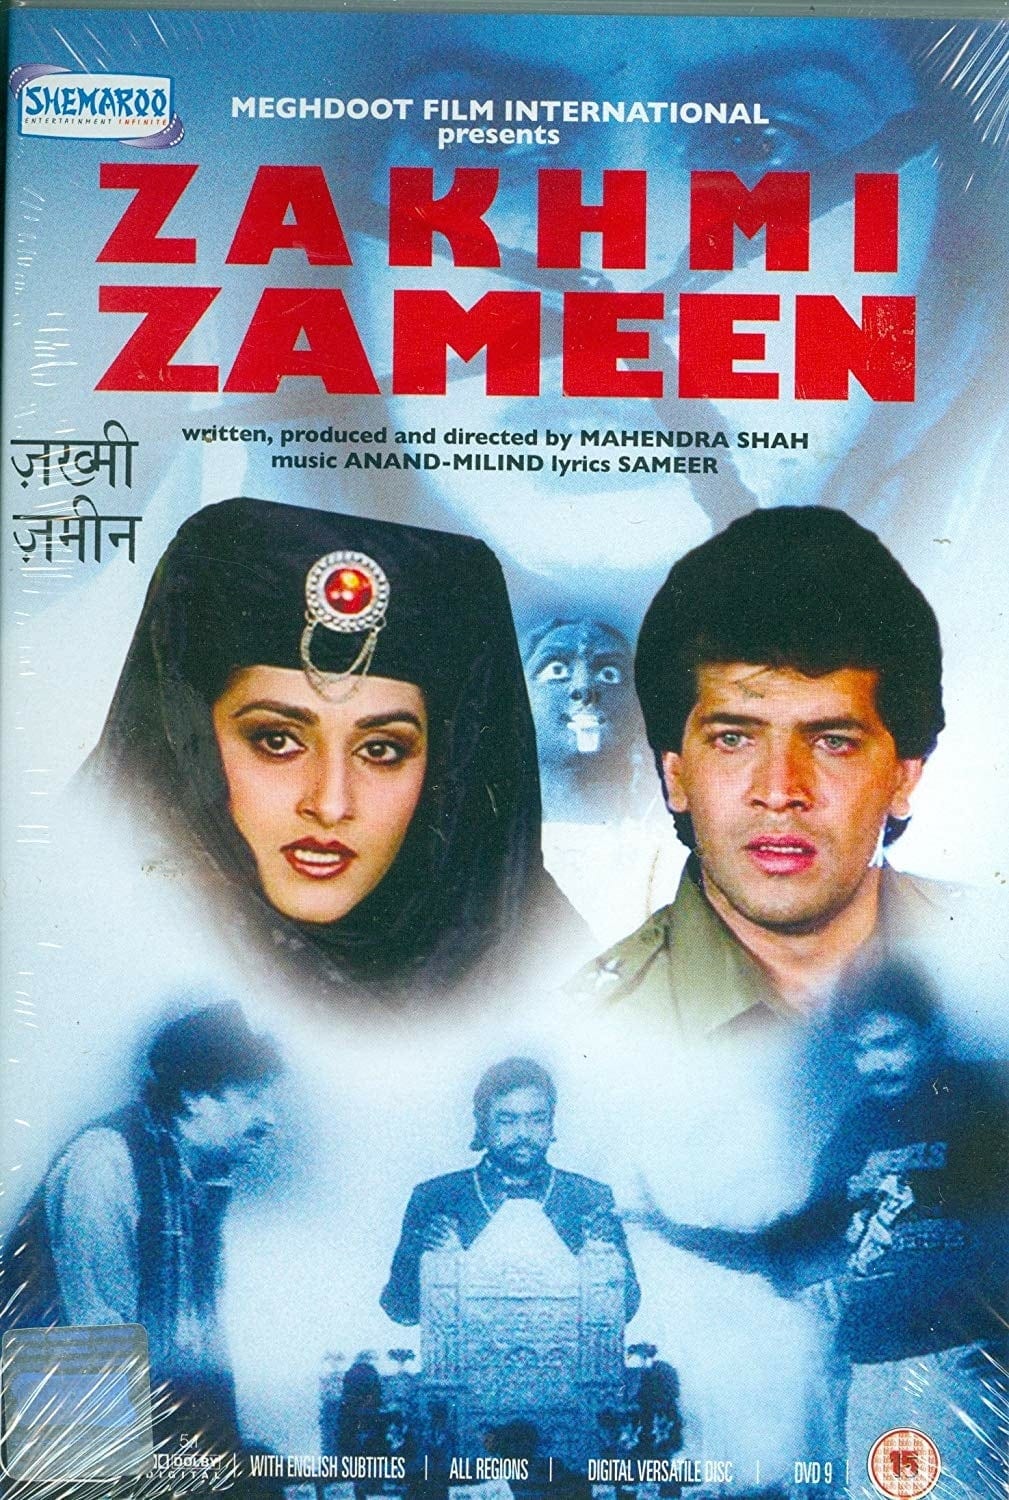 Poster for the movie "Zakhmi Zameen"